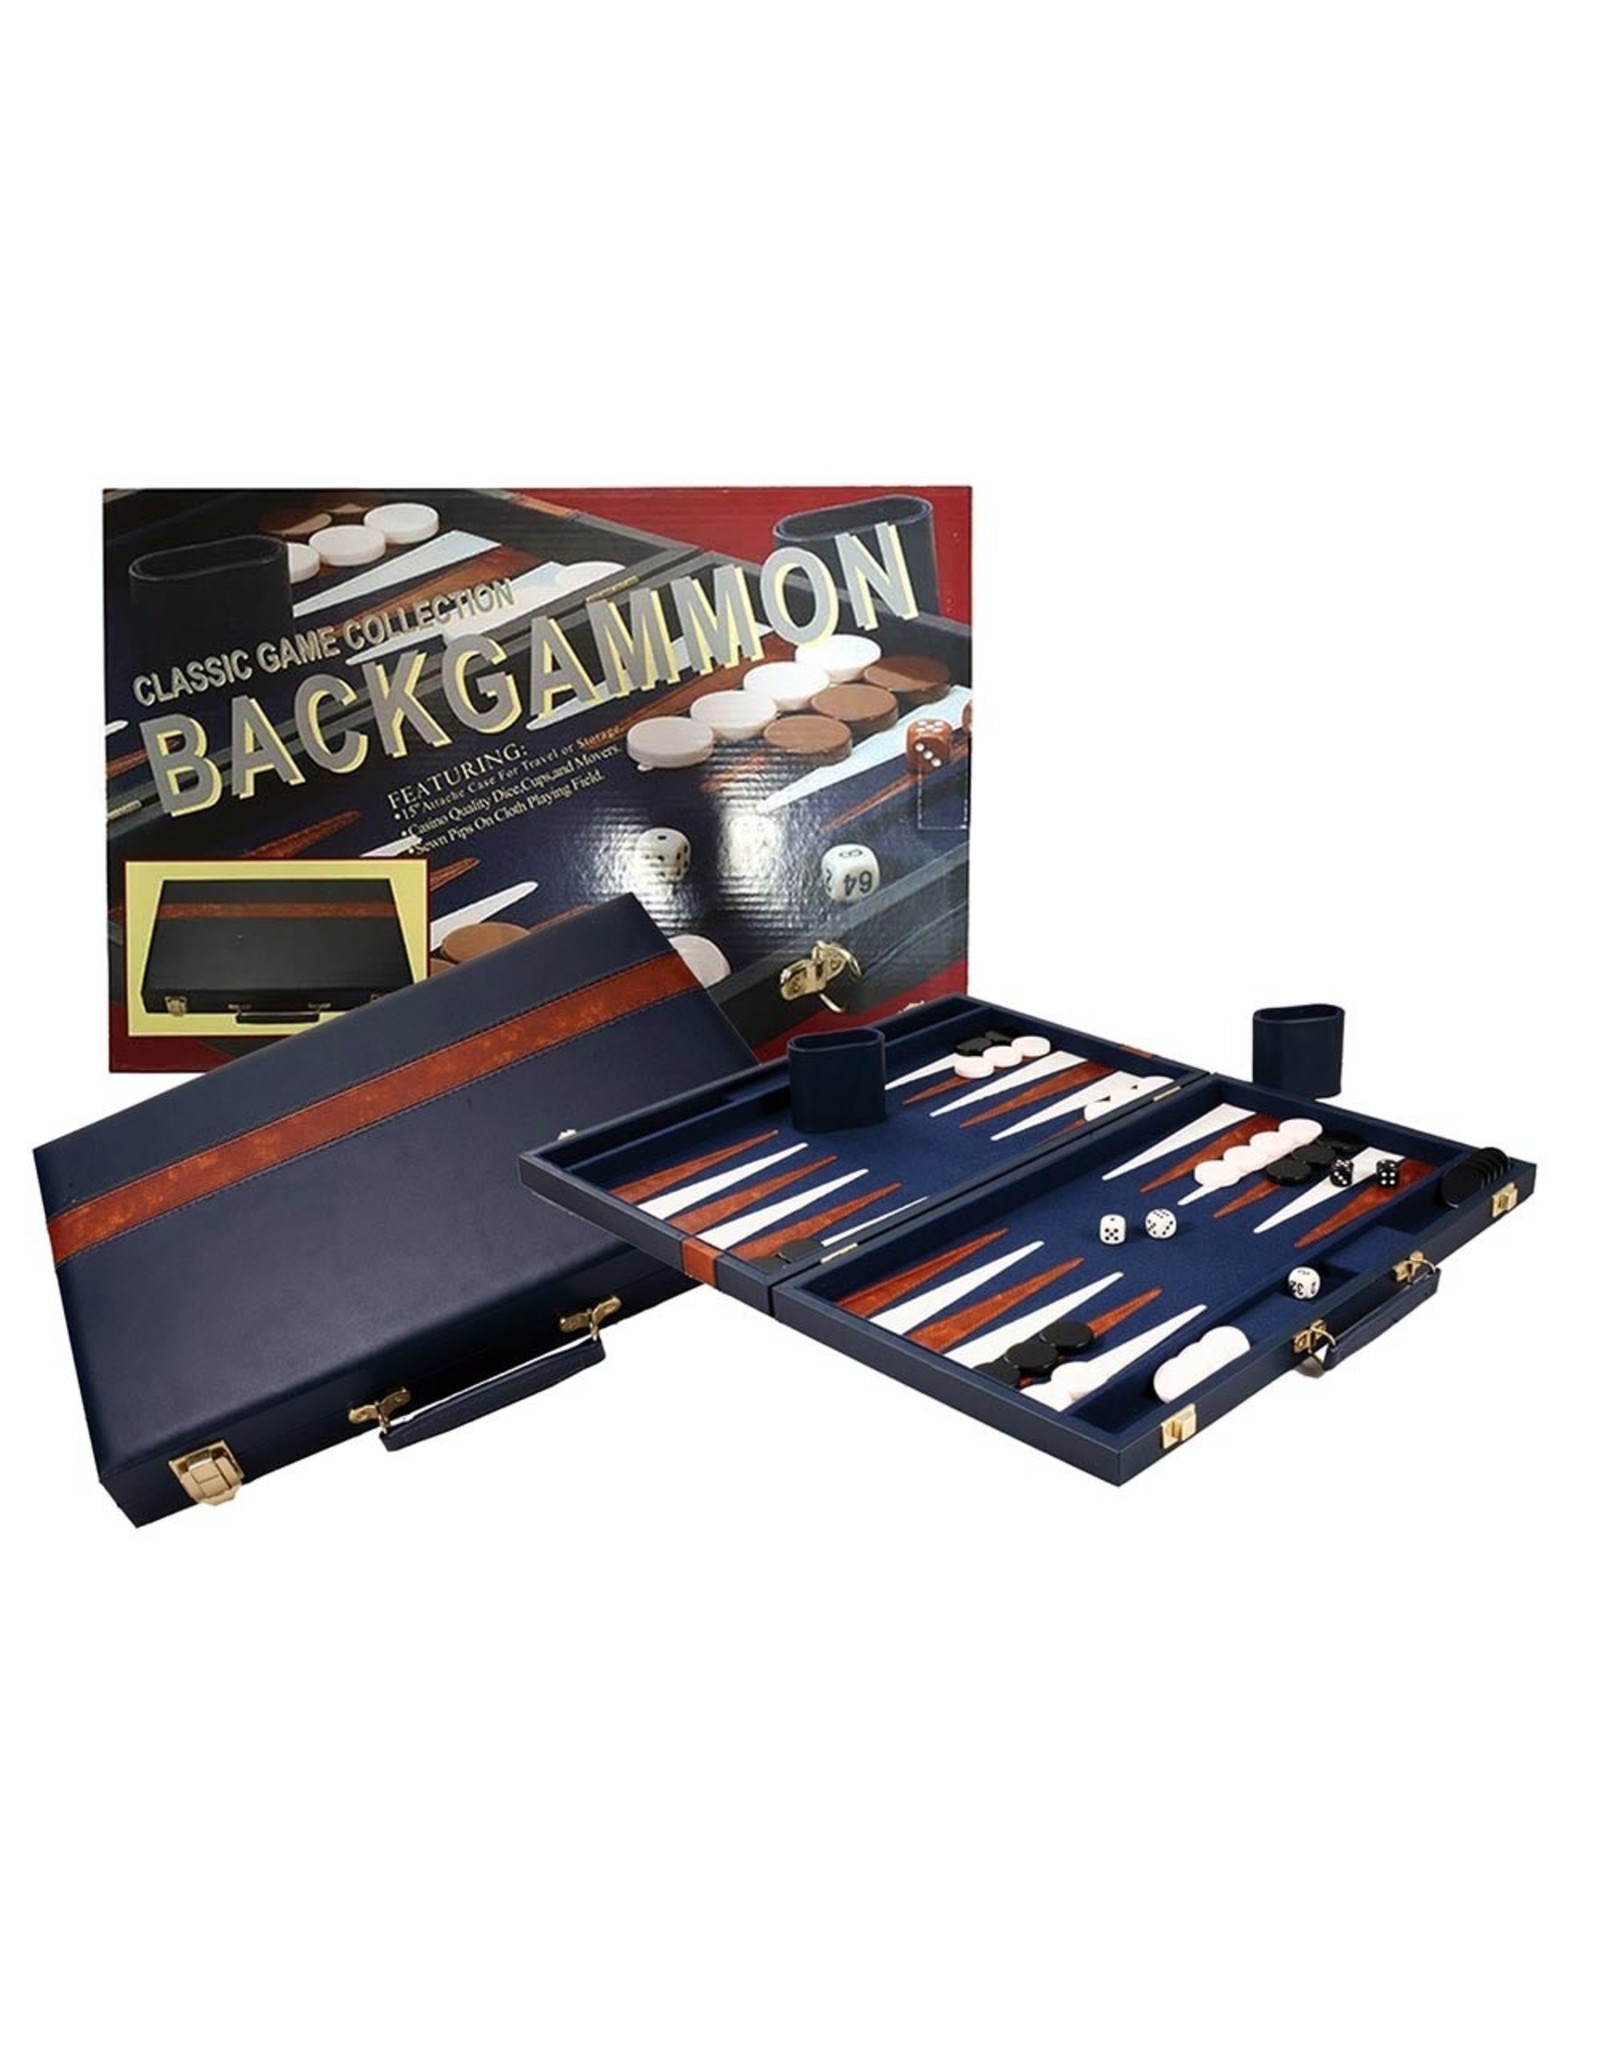 15 " Backgammon